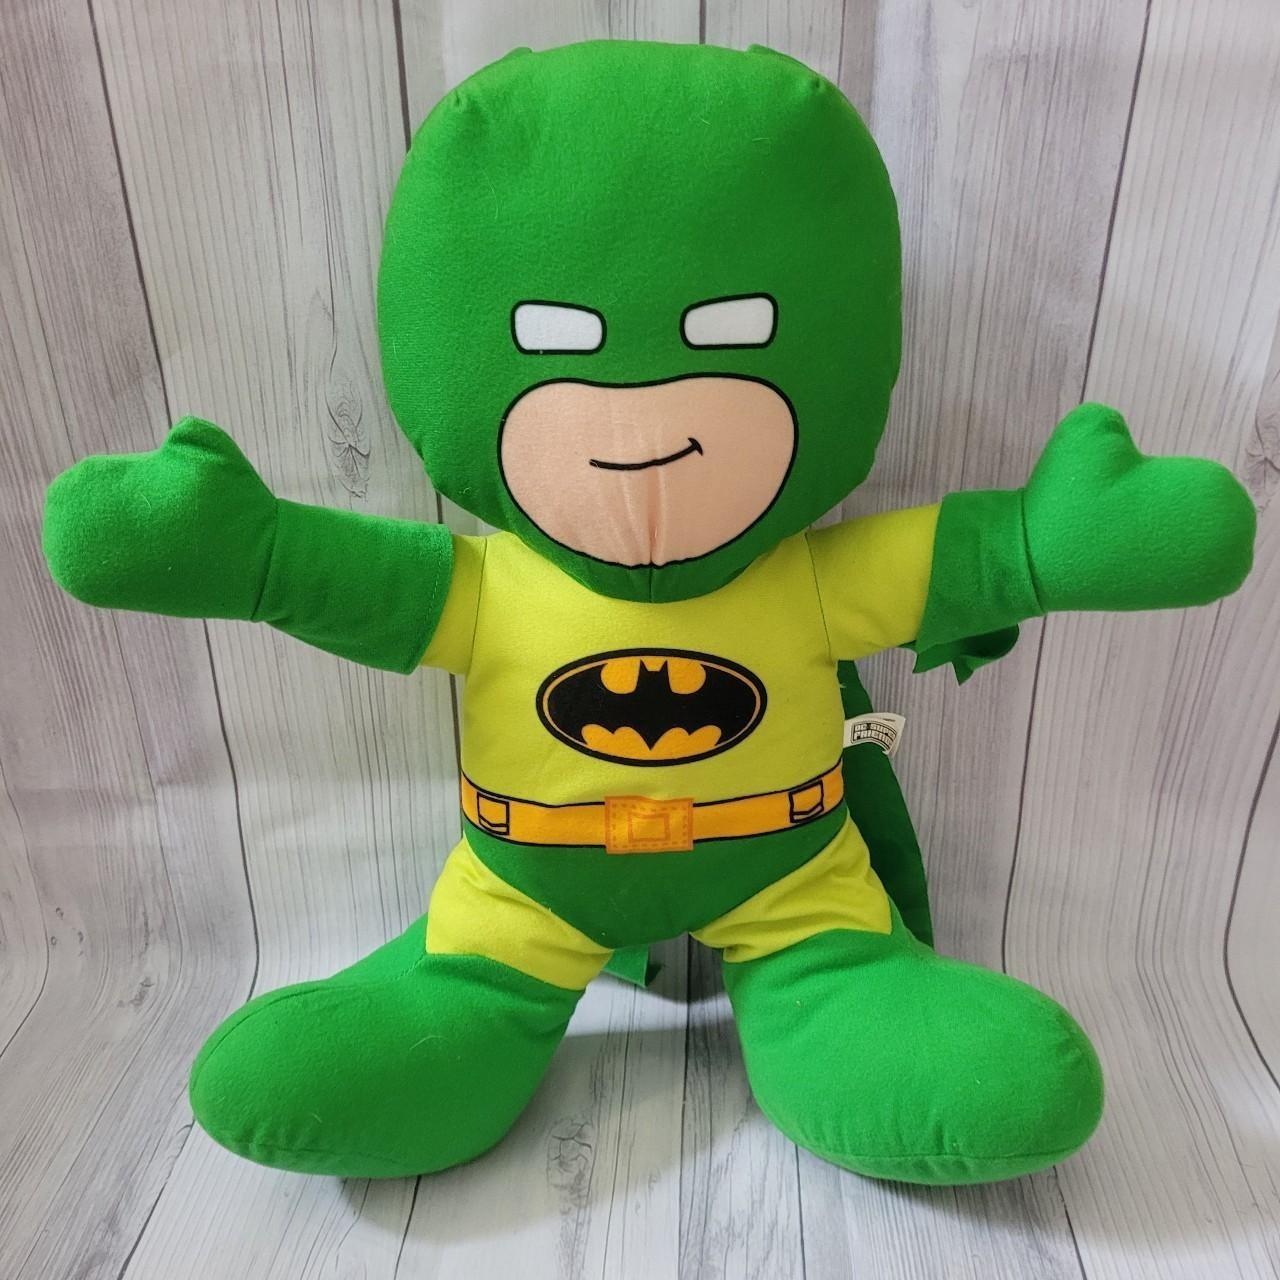 DC Super Friends Green Batman Plush Toy Factory